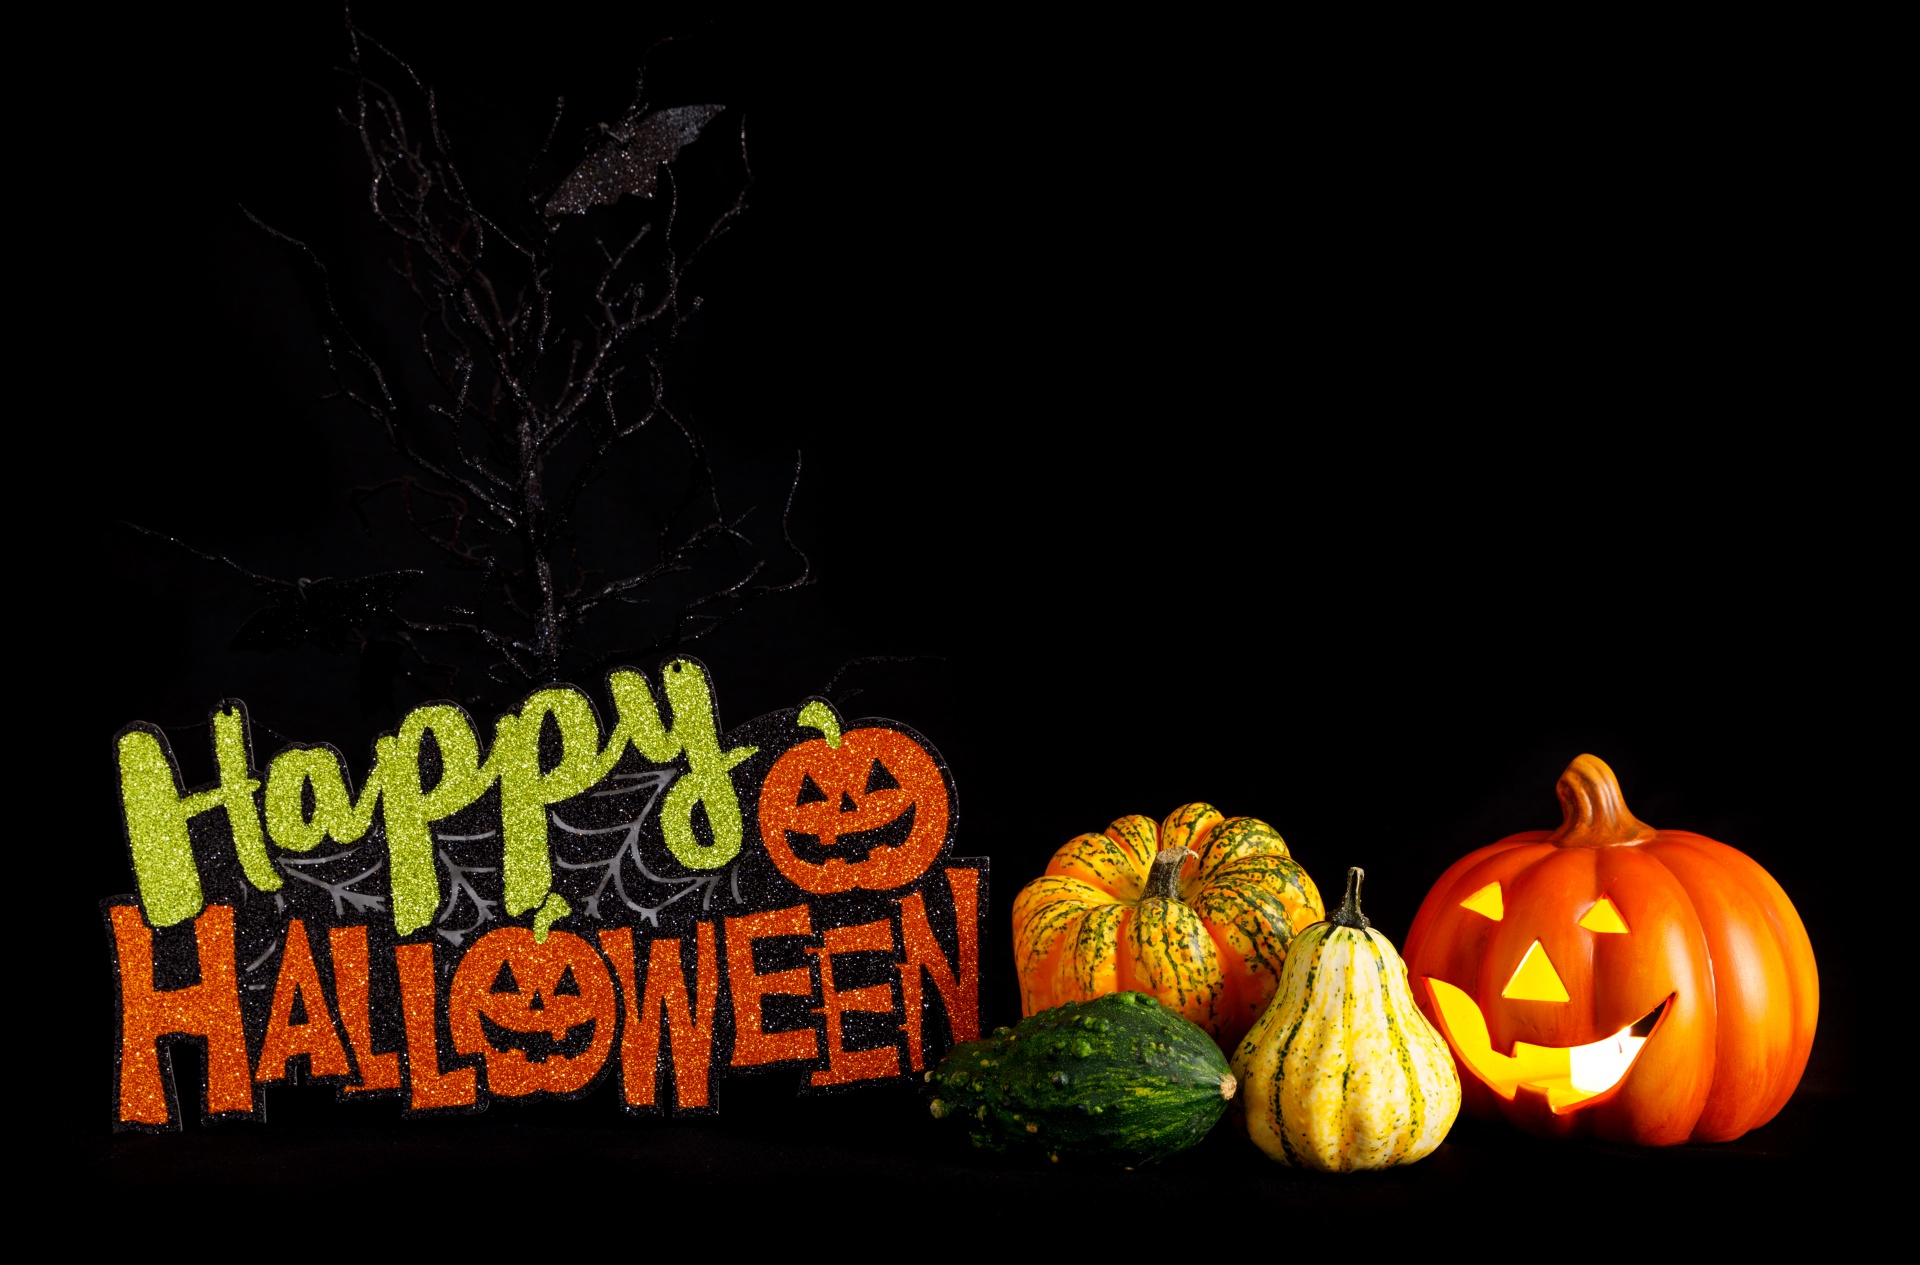 7 Happy Halloween Images to Post on Facebook, Twitter, Instagram ...